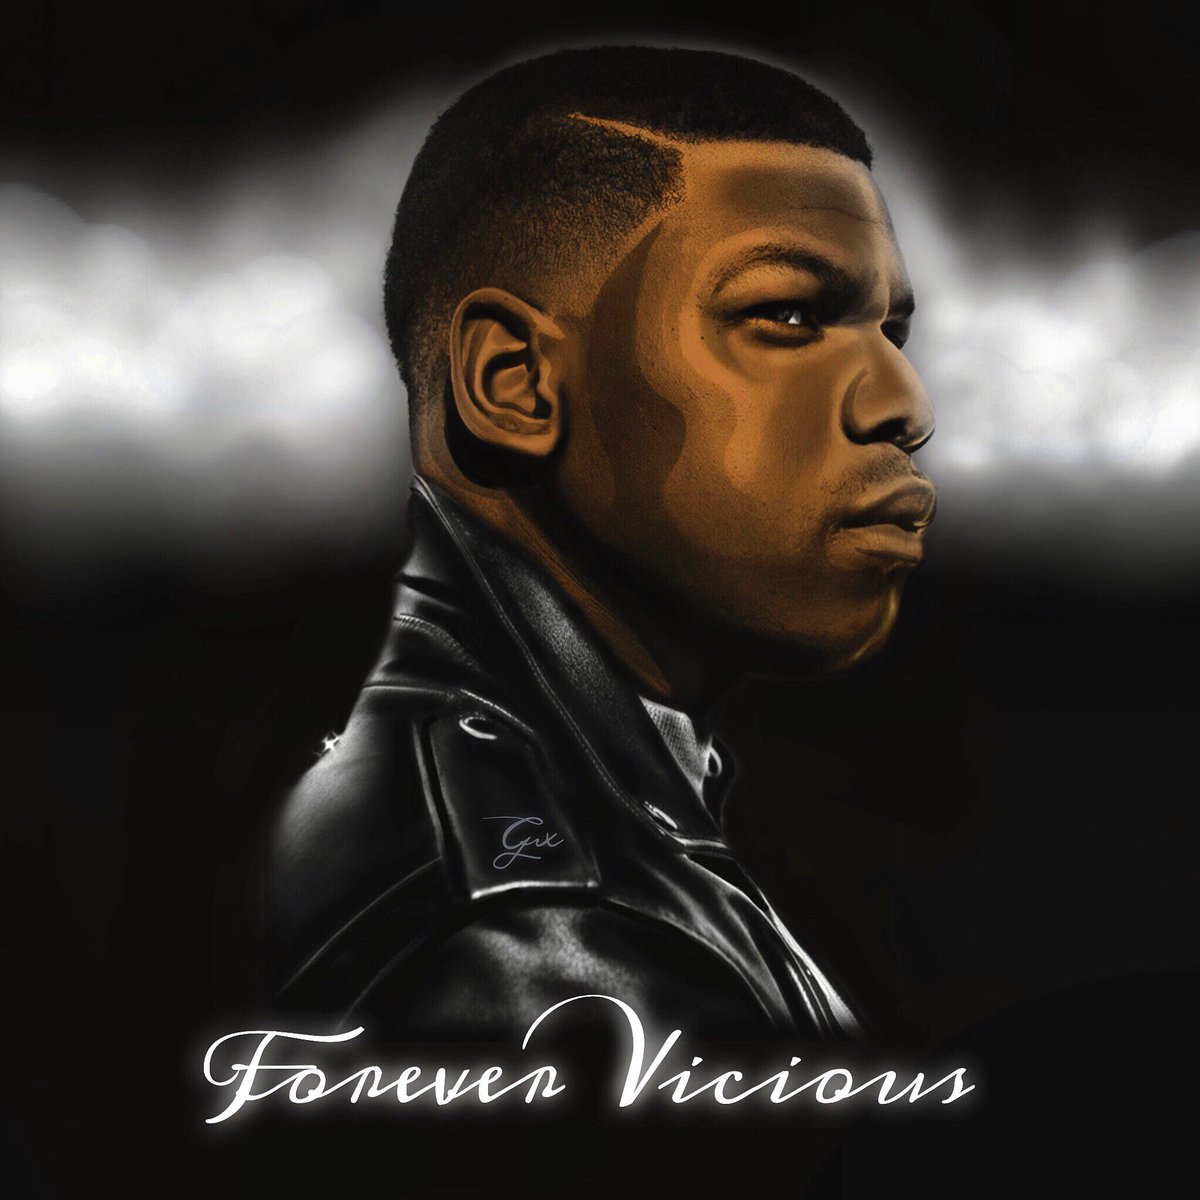 RT @Forever_Vicious: Captain Boyega ! 
GhxstGod Gx Series: ????
Character: @JohnBoyega 
We Are Forever Vicious Forever https://t.co/MKiokc4p5f